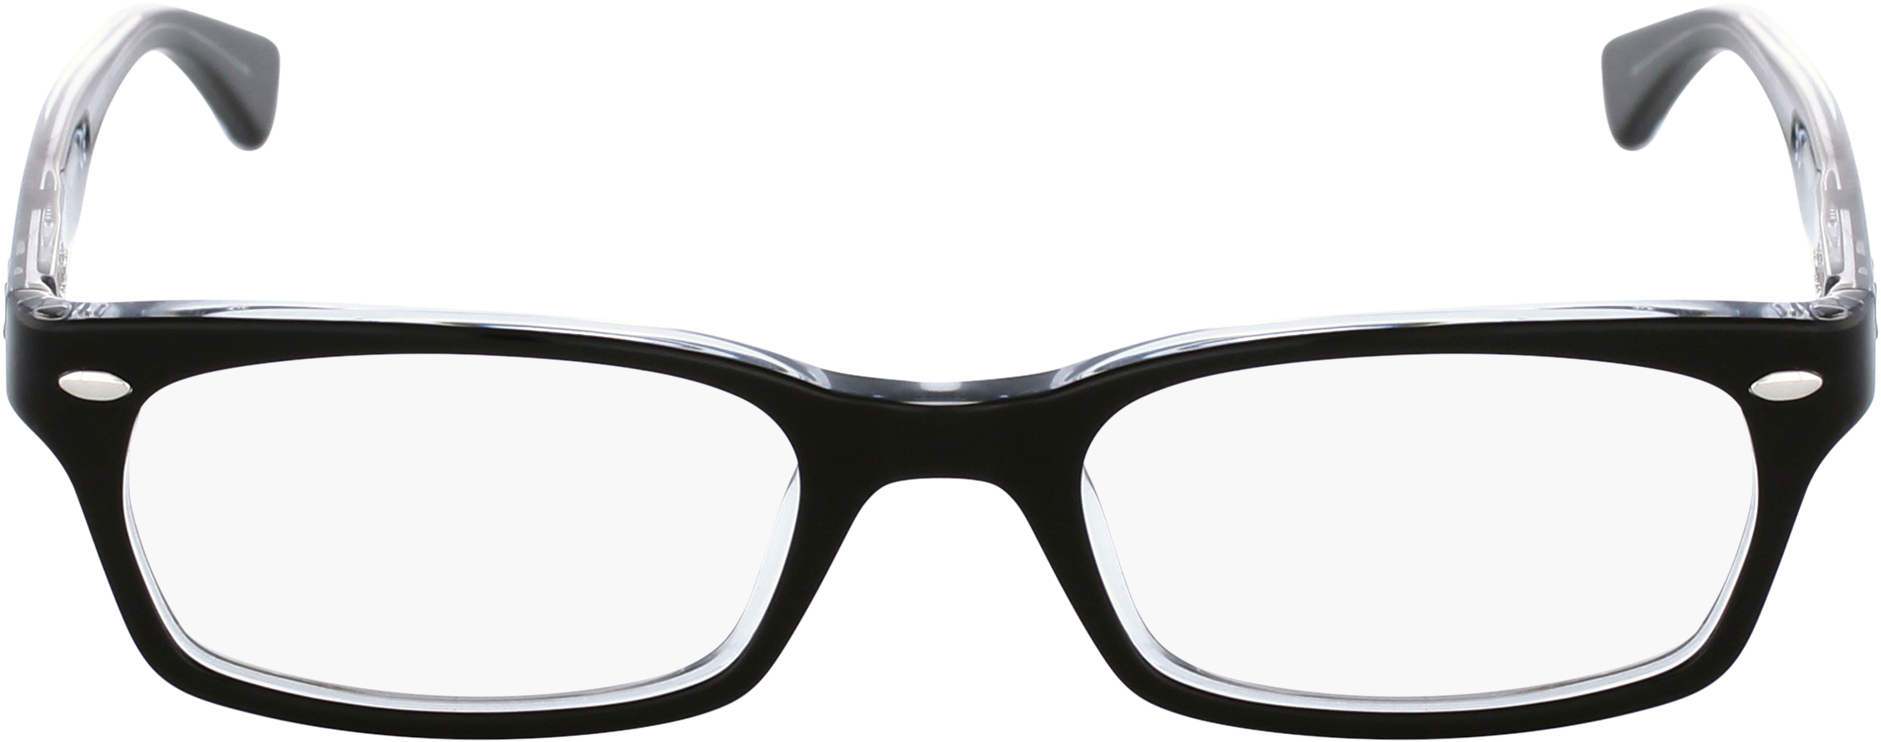 Black Safety Goggles Transparent Background PNG